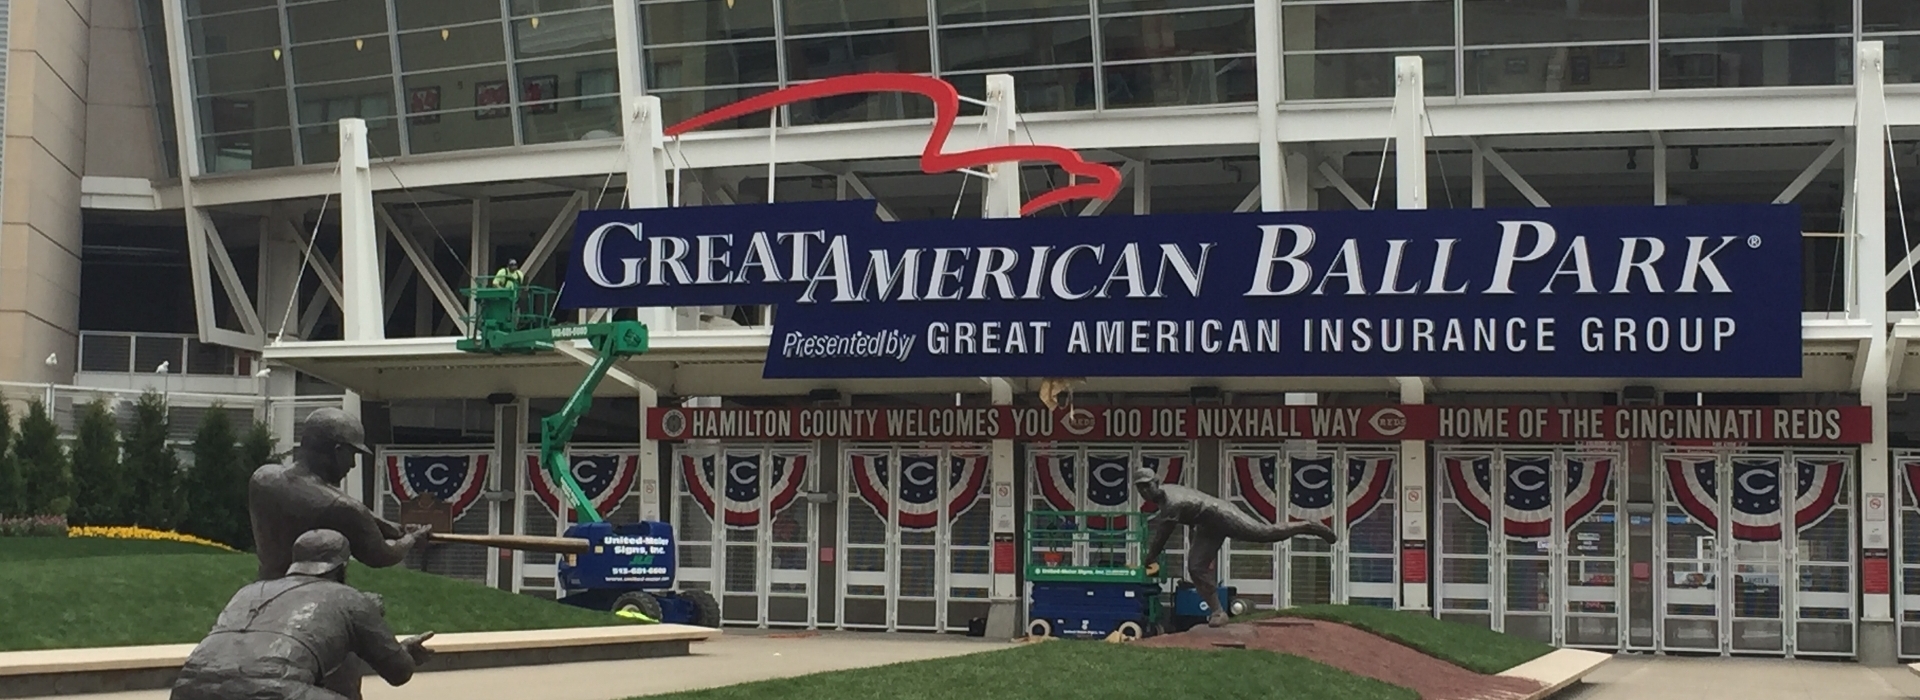 Great American Ball Park entrance